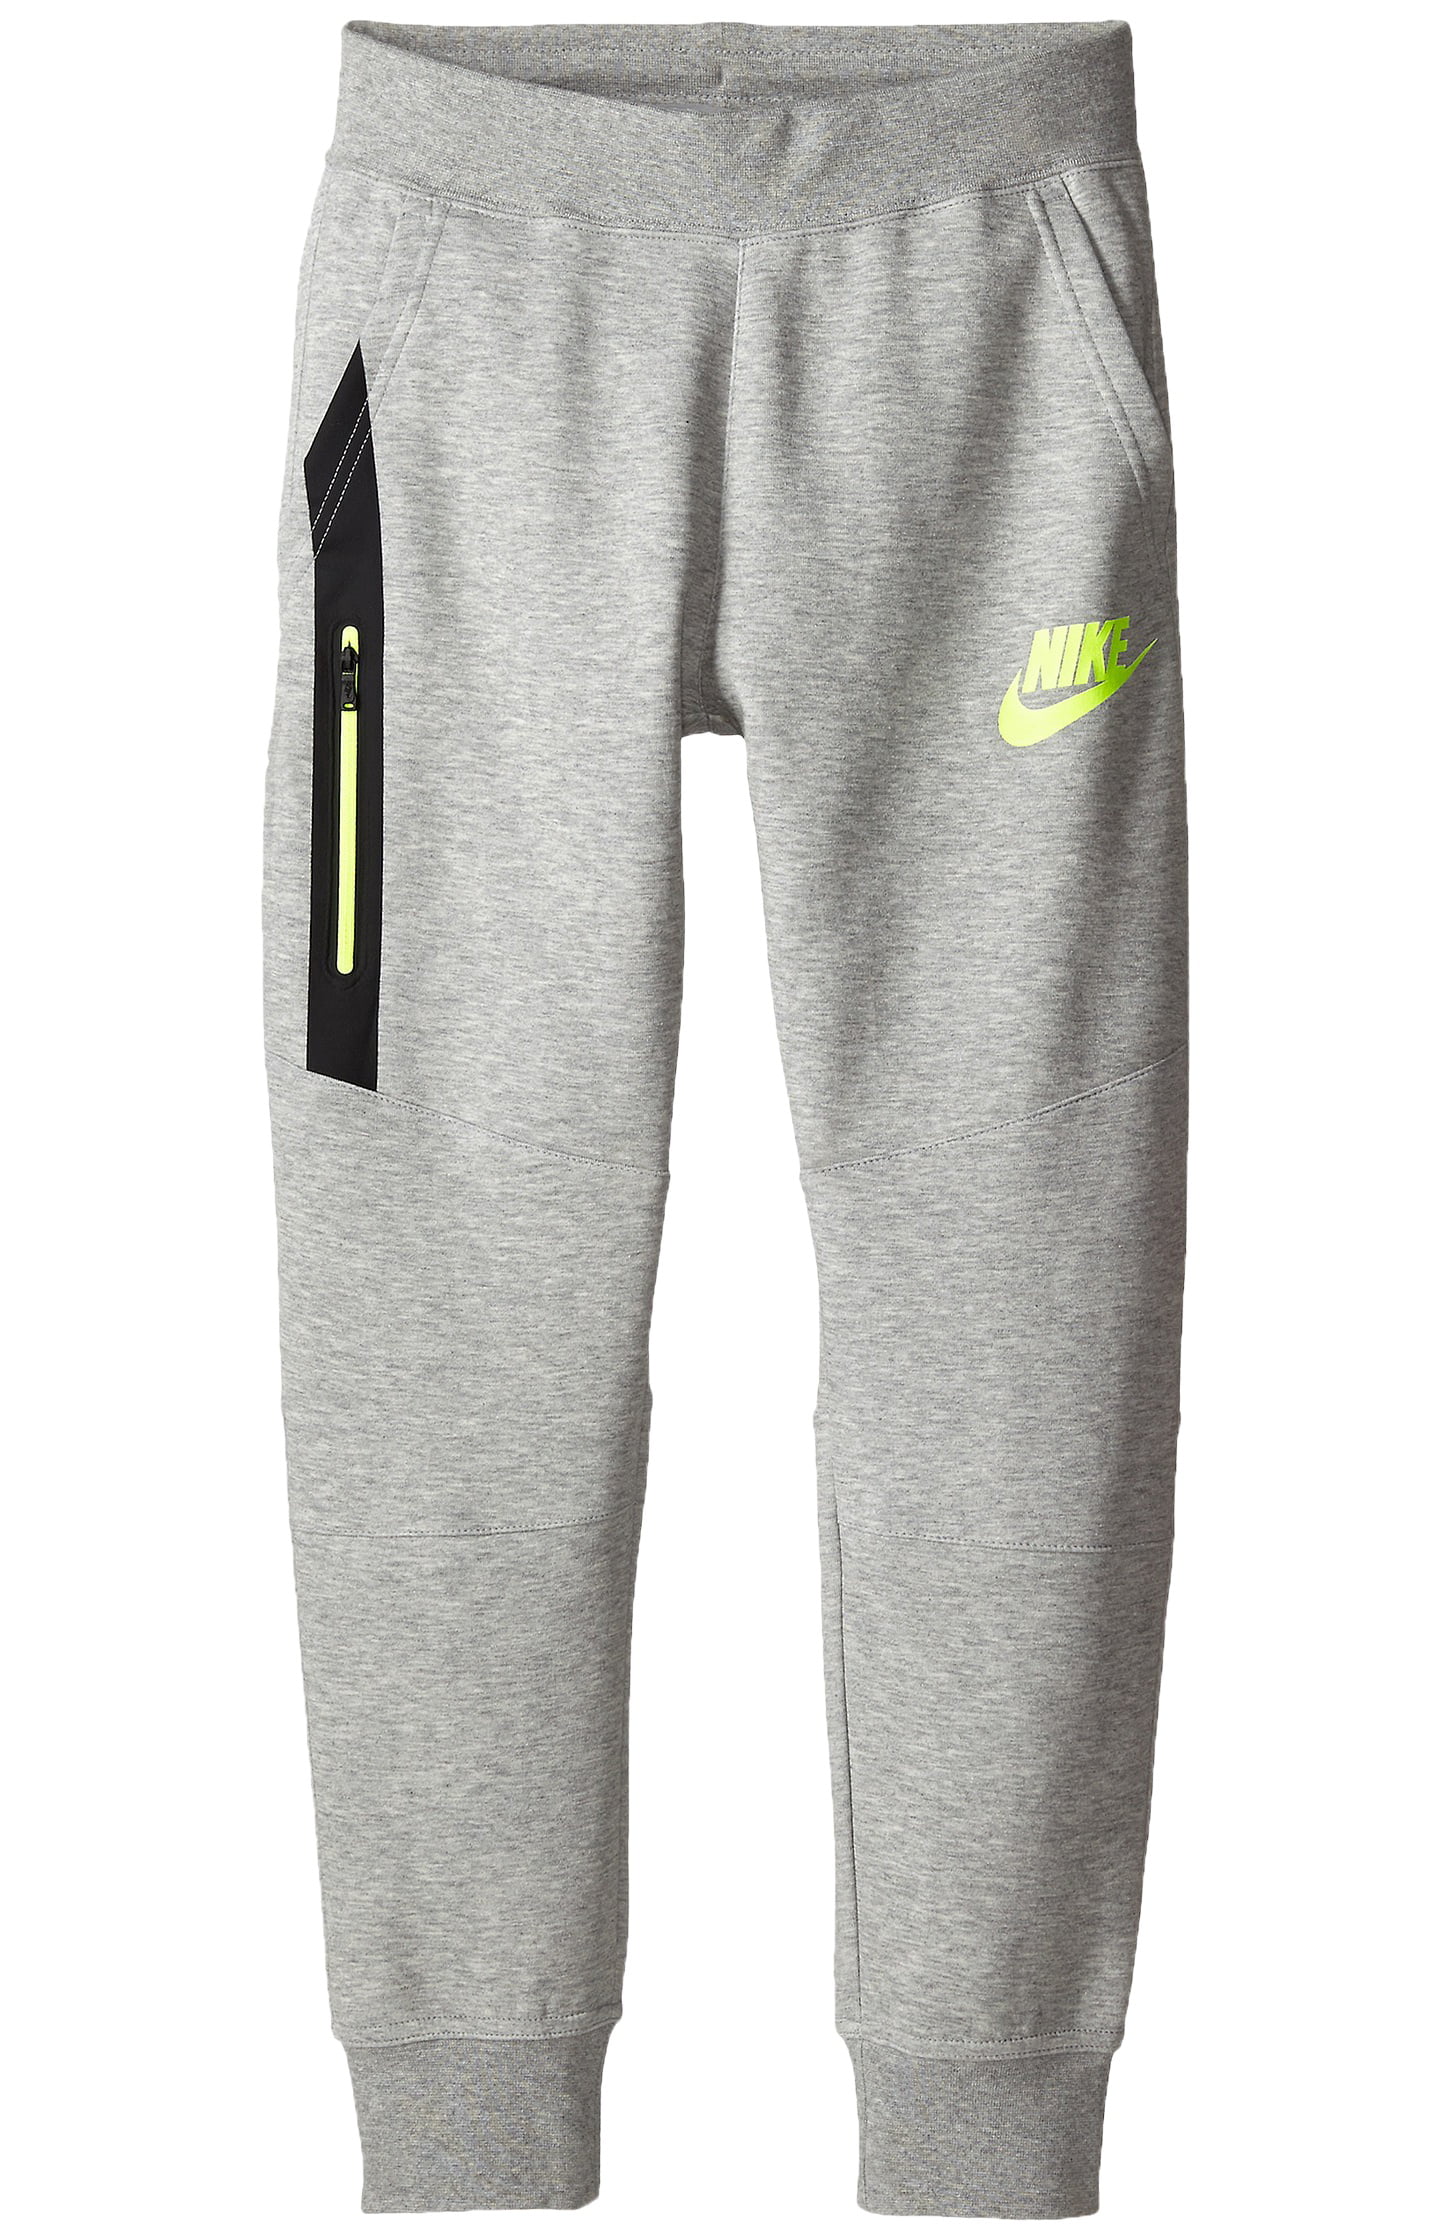 Nike Youth Boys Tech Fleece Pants Light Grey - Walmart.com